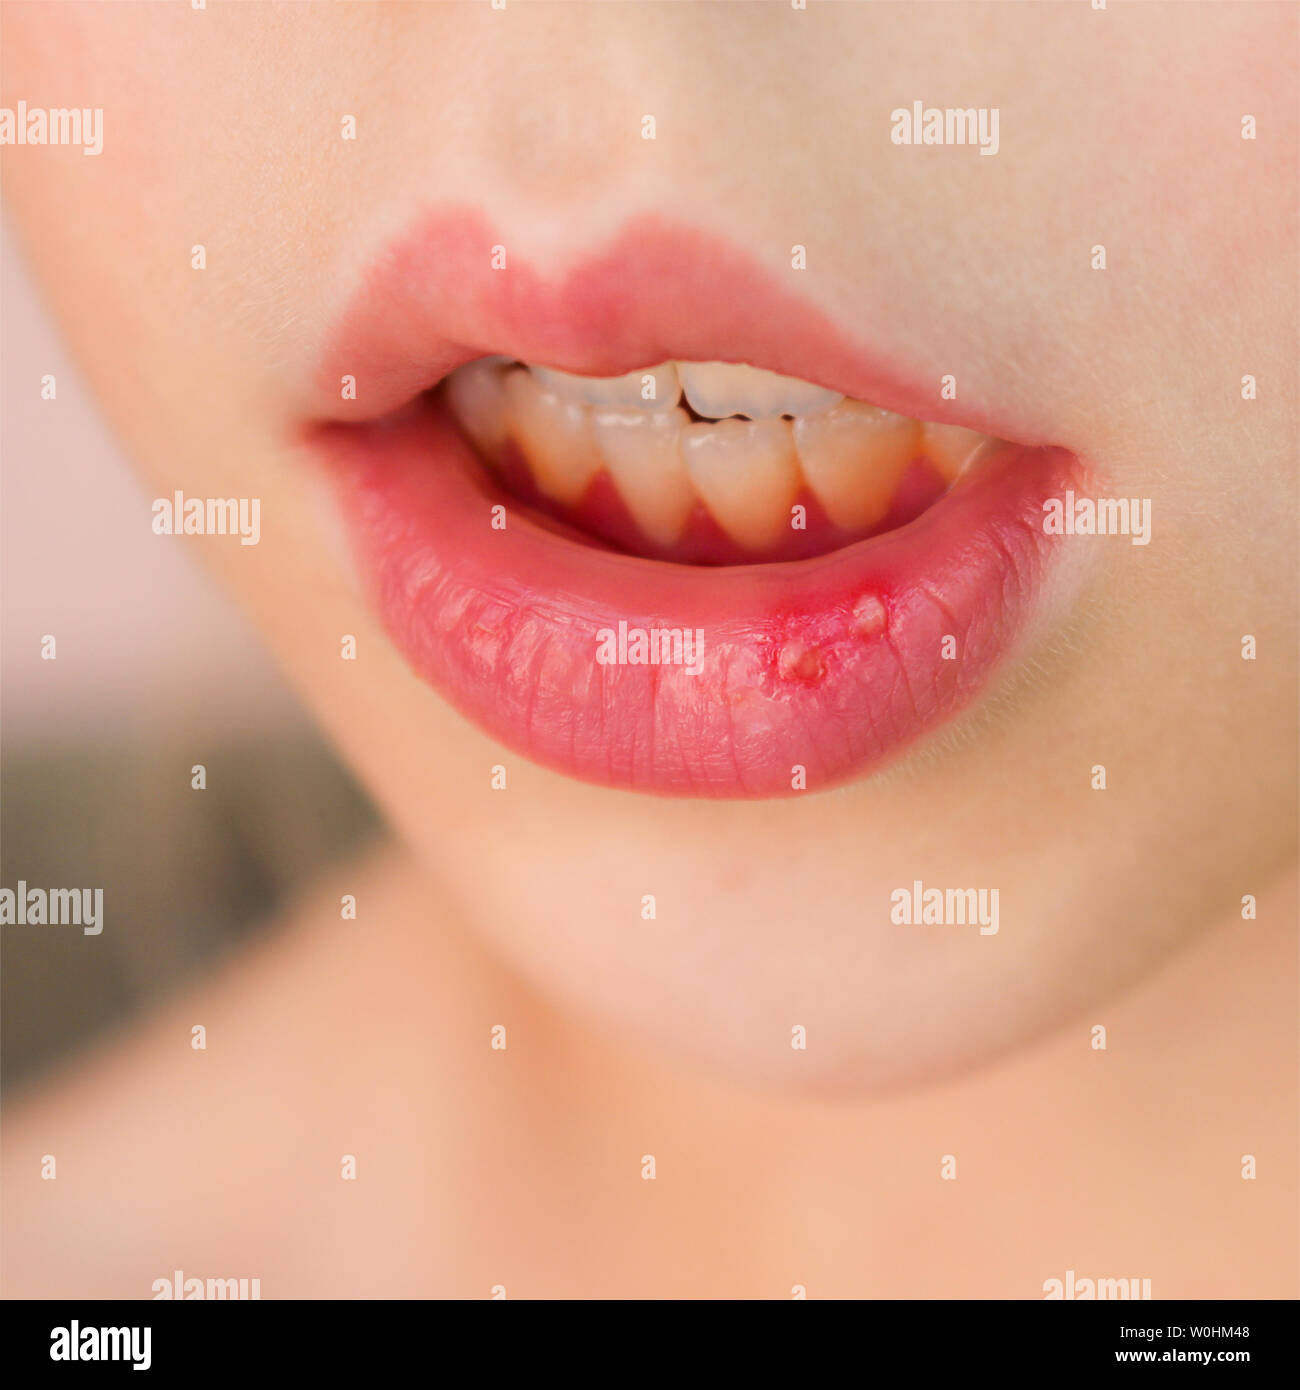 Stomatitis on the lip in child Stock Photo